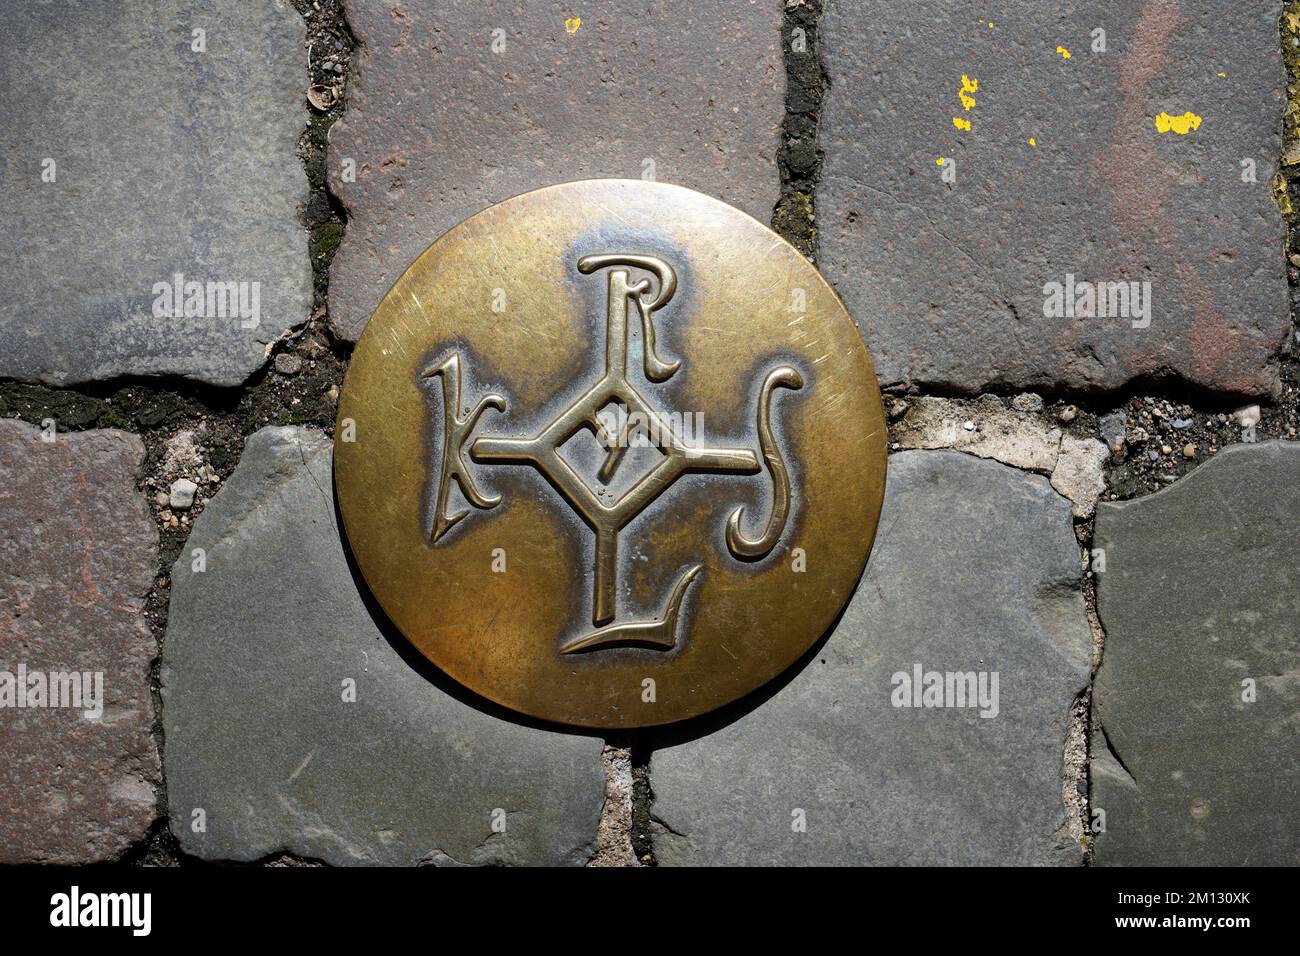 Germany, North Rhine-Westphalia, Aachen, pedestrian zone, cobblestone, floor marking, bronze plate, Charlemagne seal, KRLS, monogram, Charlemagne Stock Photo